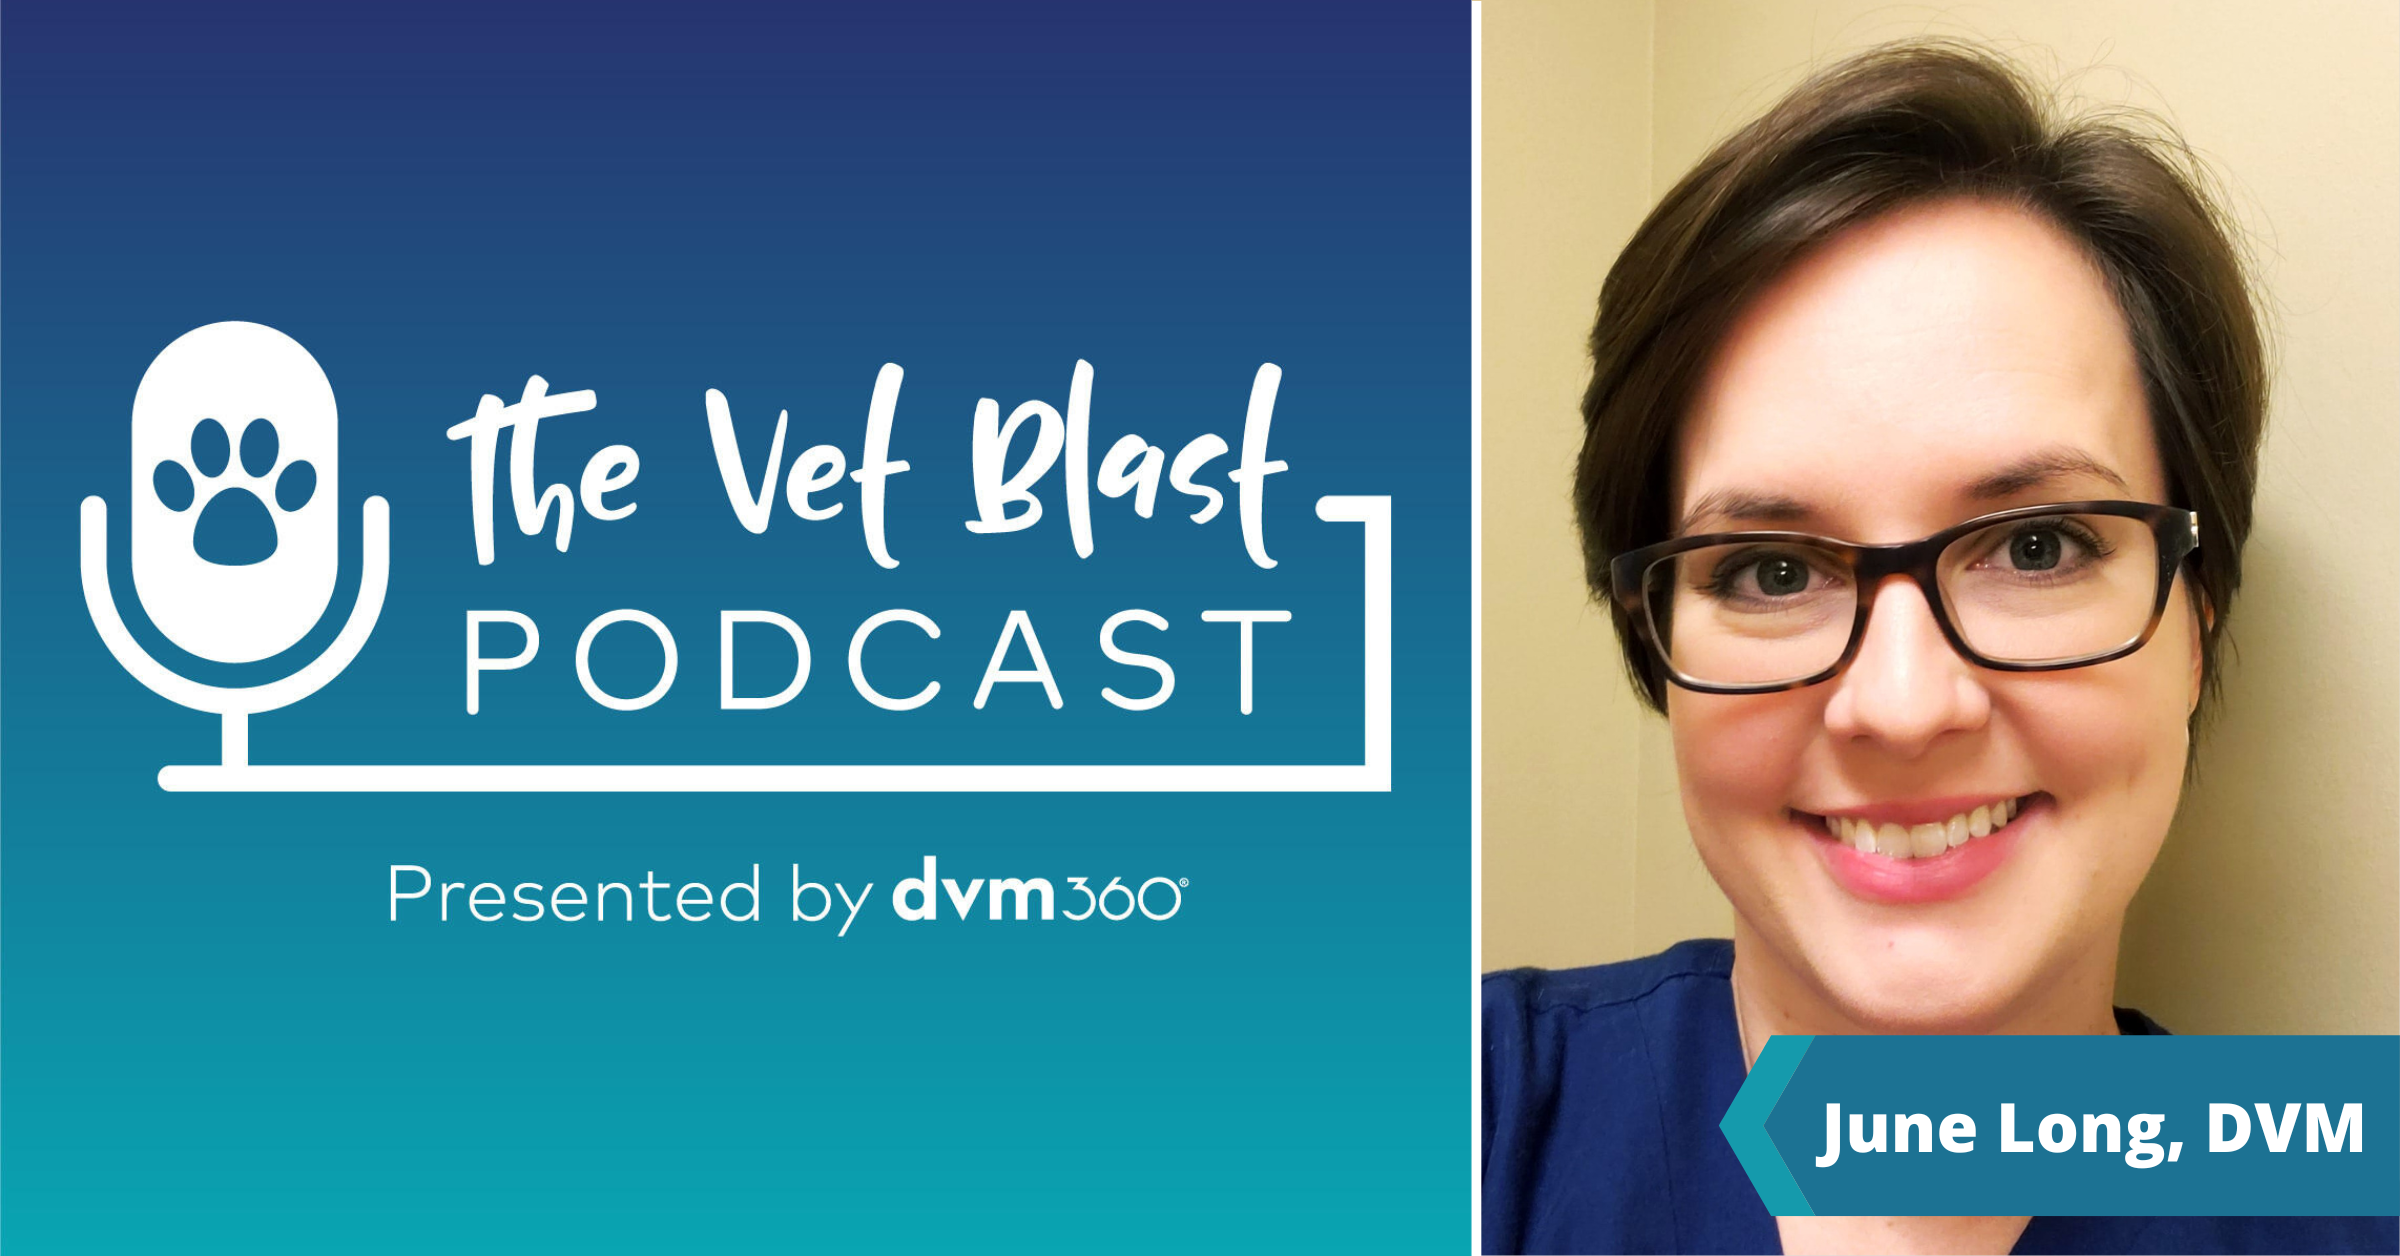 The Vet Blast Podcast with June Long